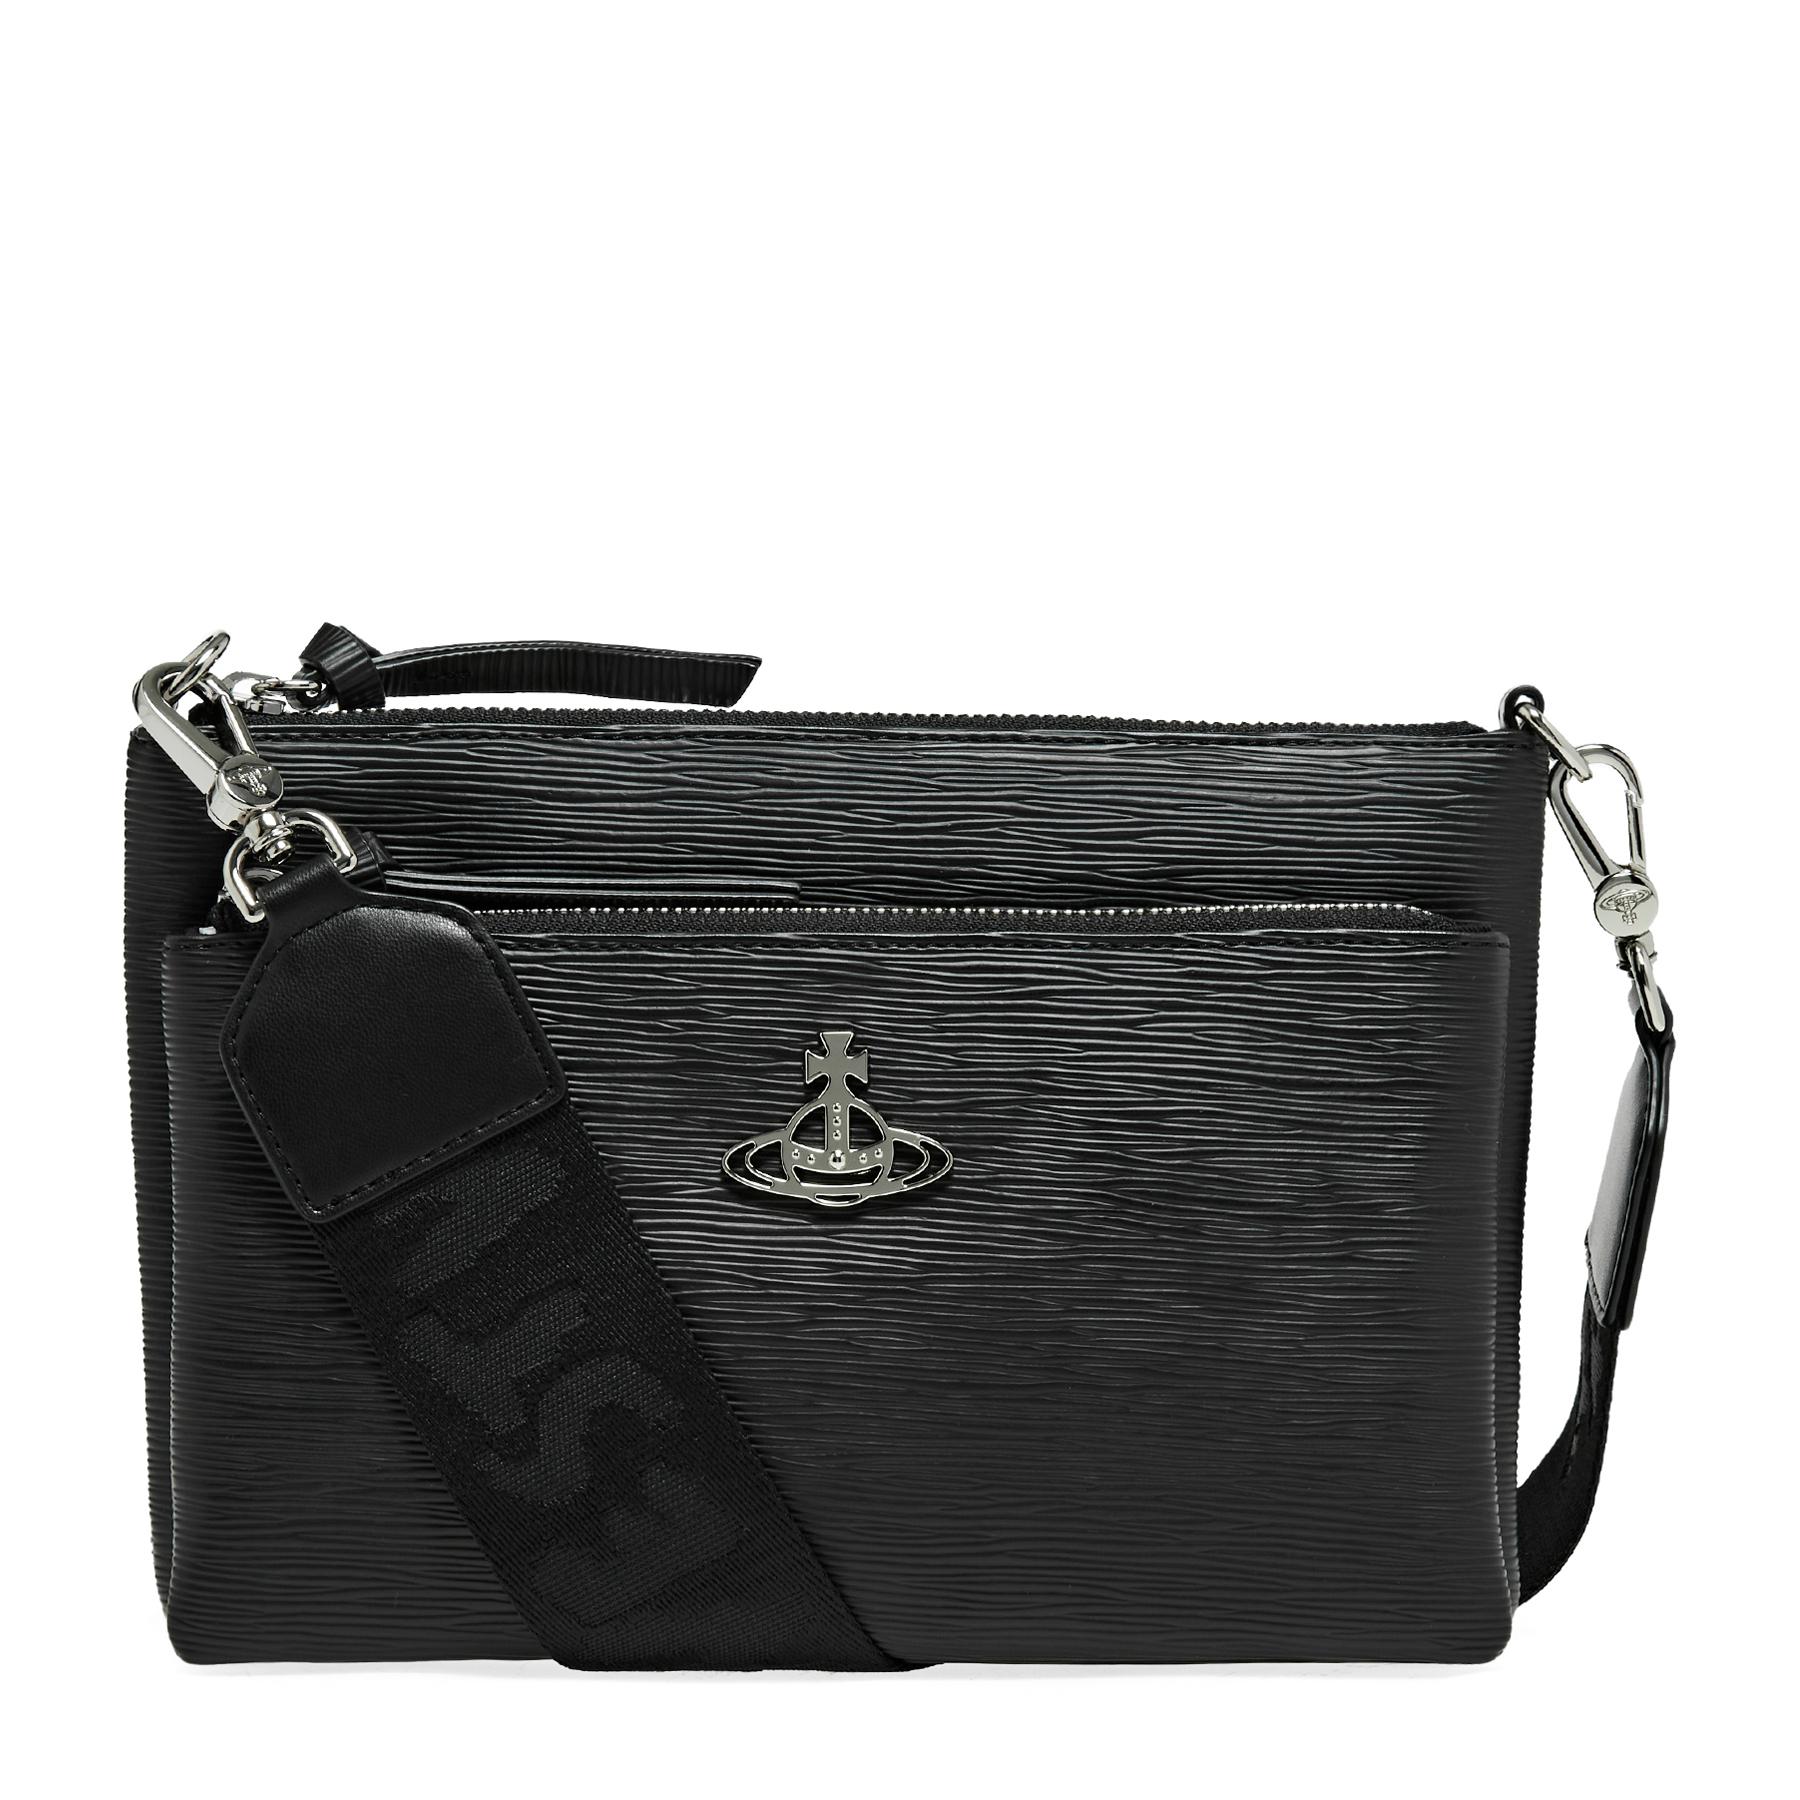 Vivienne Westwood Penny Double Pouch Crossbody Handbag in Black | Lyst